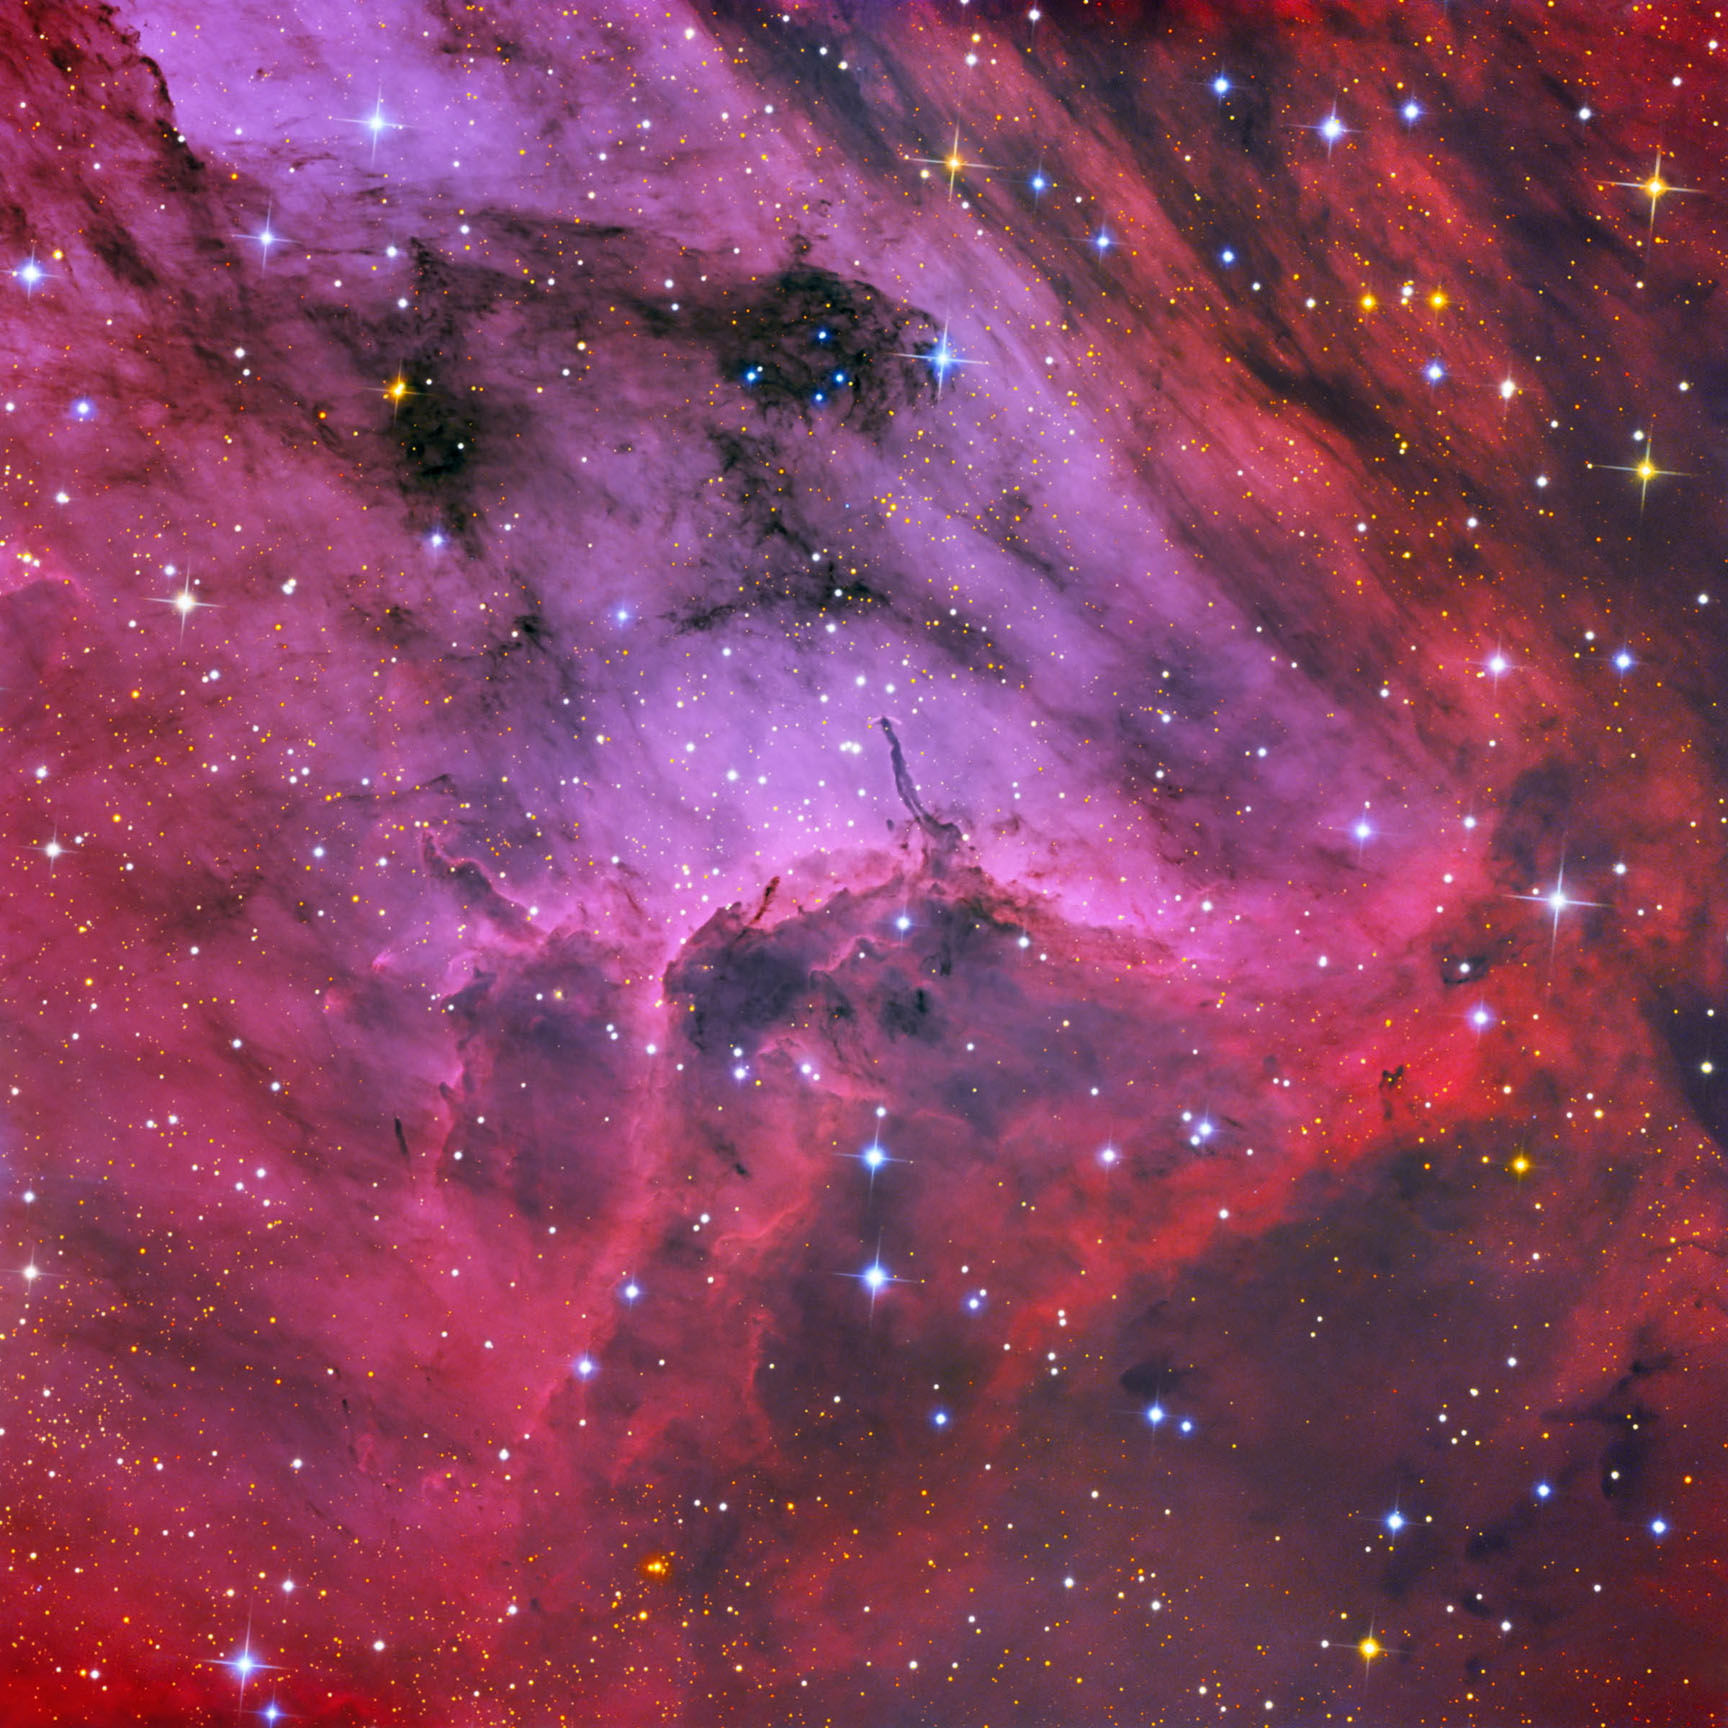 Balmer lines writ large: Pelican Nebula